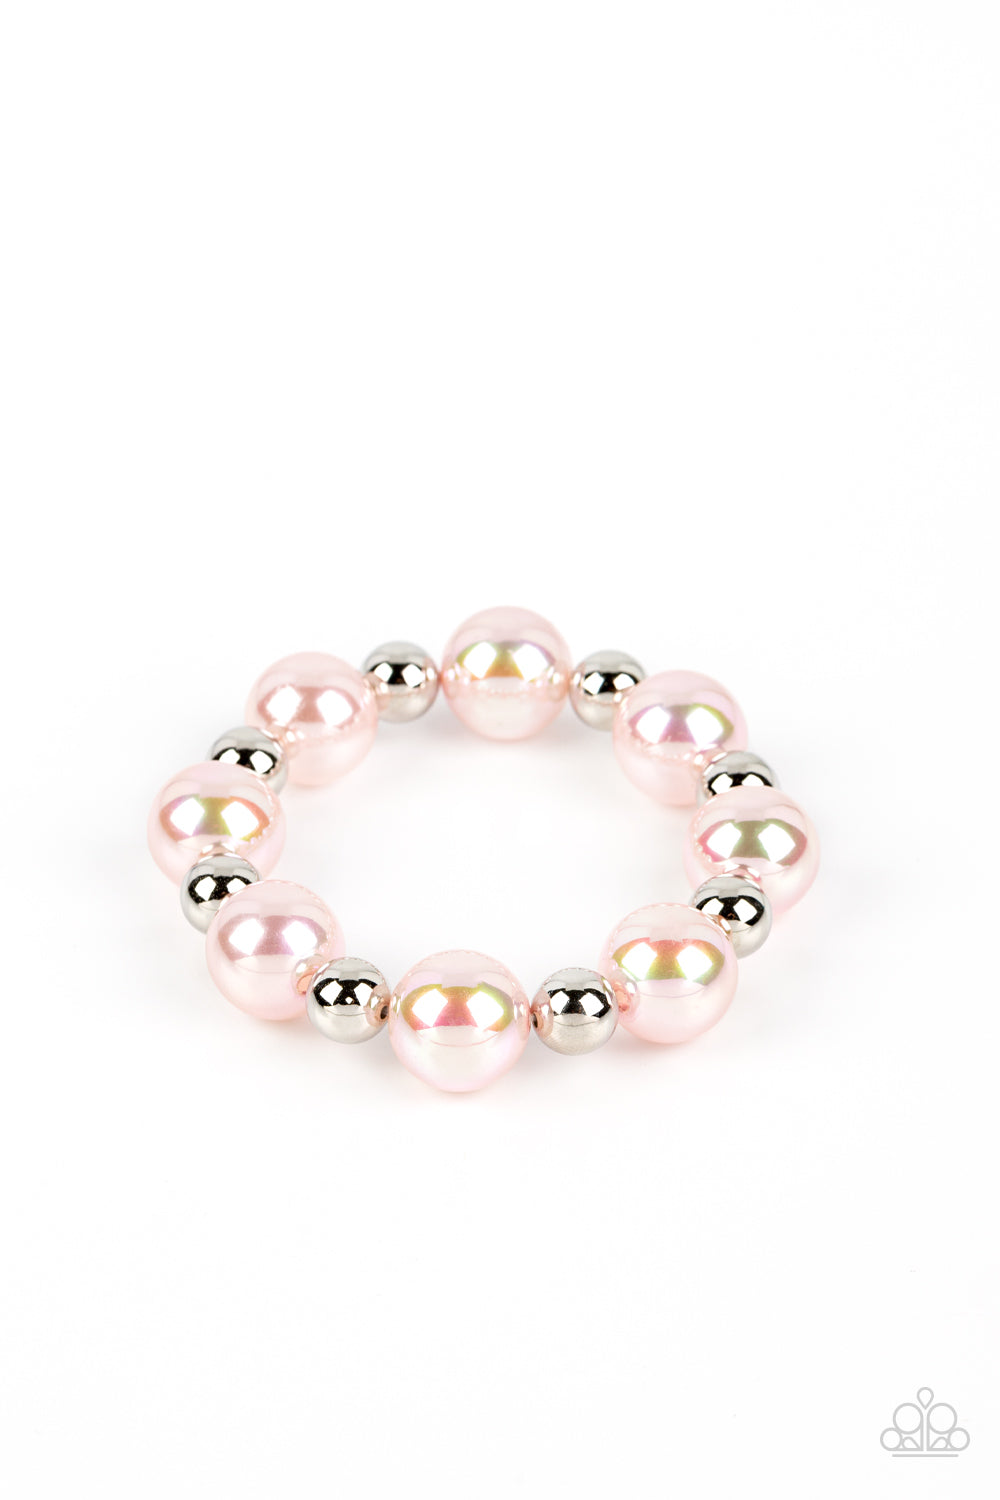 A DREAMSCAPE Come True - Pink Pearl Bracelet